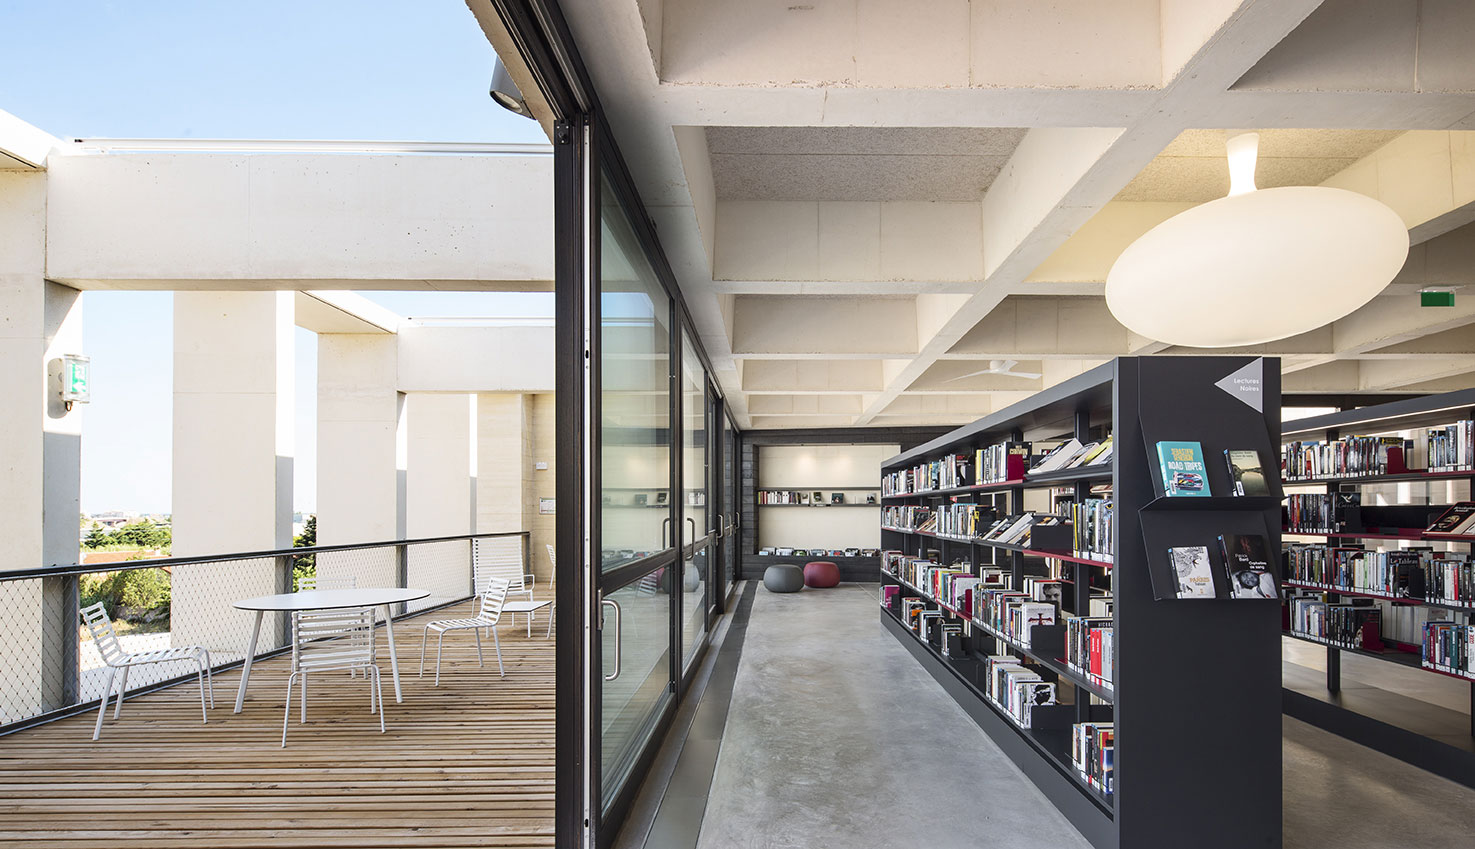 Tautem architecture - mediatheque Montaigne Frontignan - terrasse de lecture